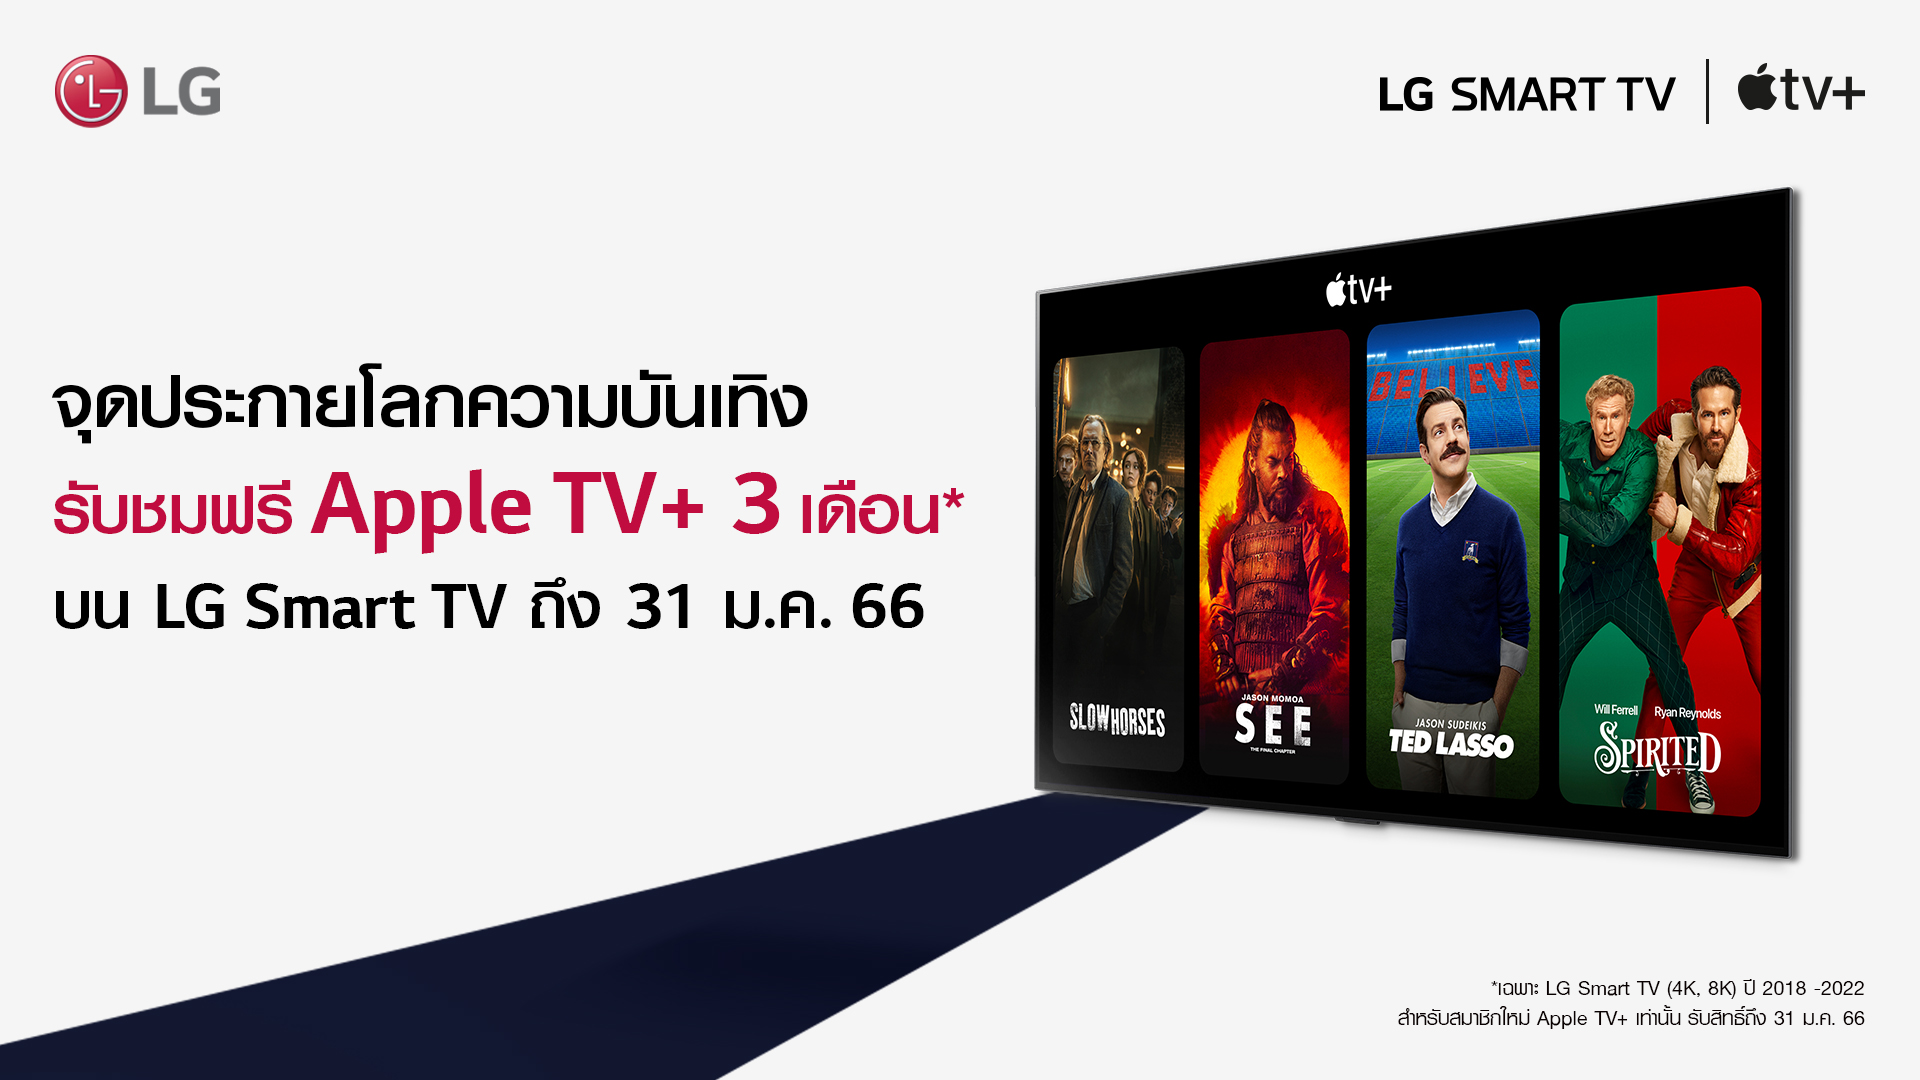 LG Smart TV - LG x Apple TV 1 - ภาพที่ 1